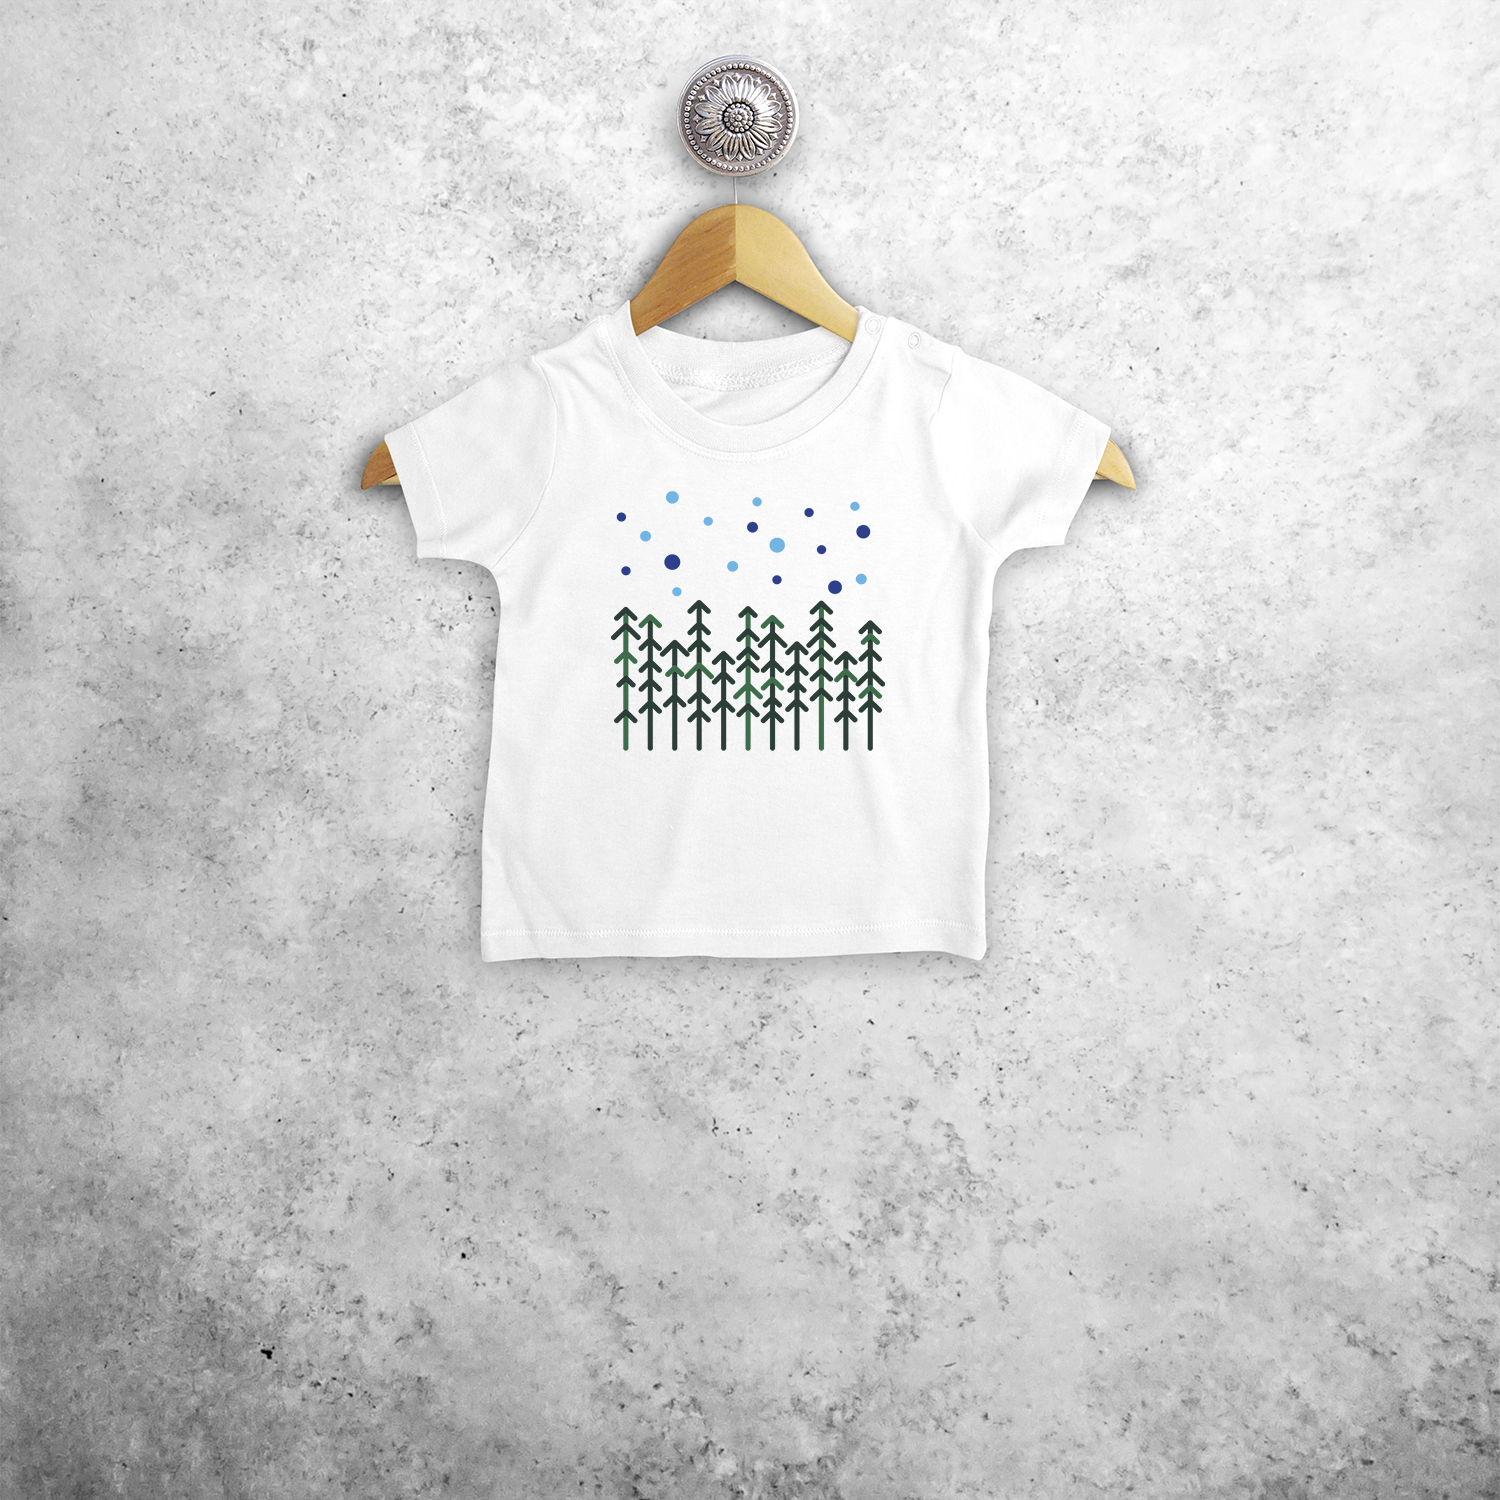 Pine trees baby shortsleeve shirt